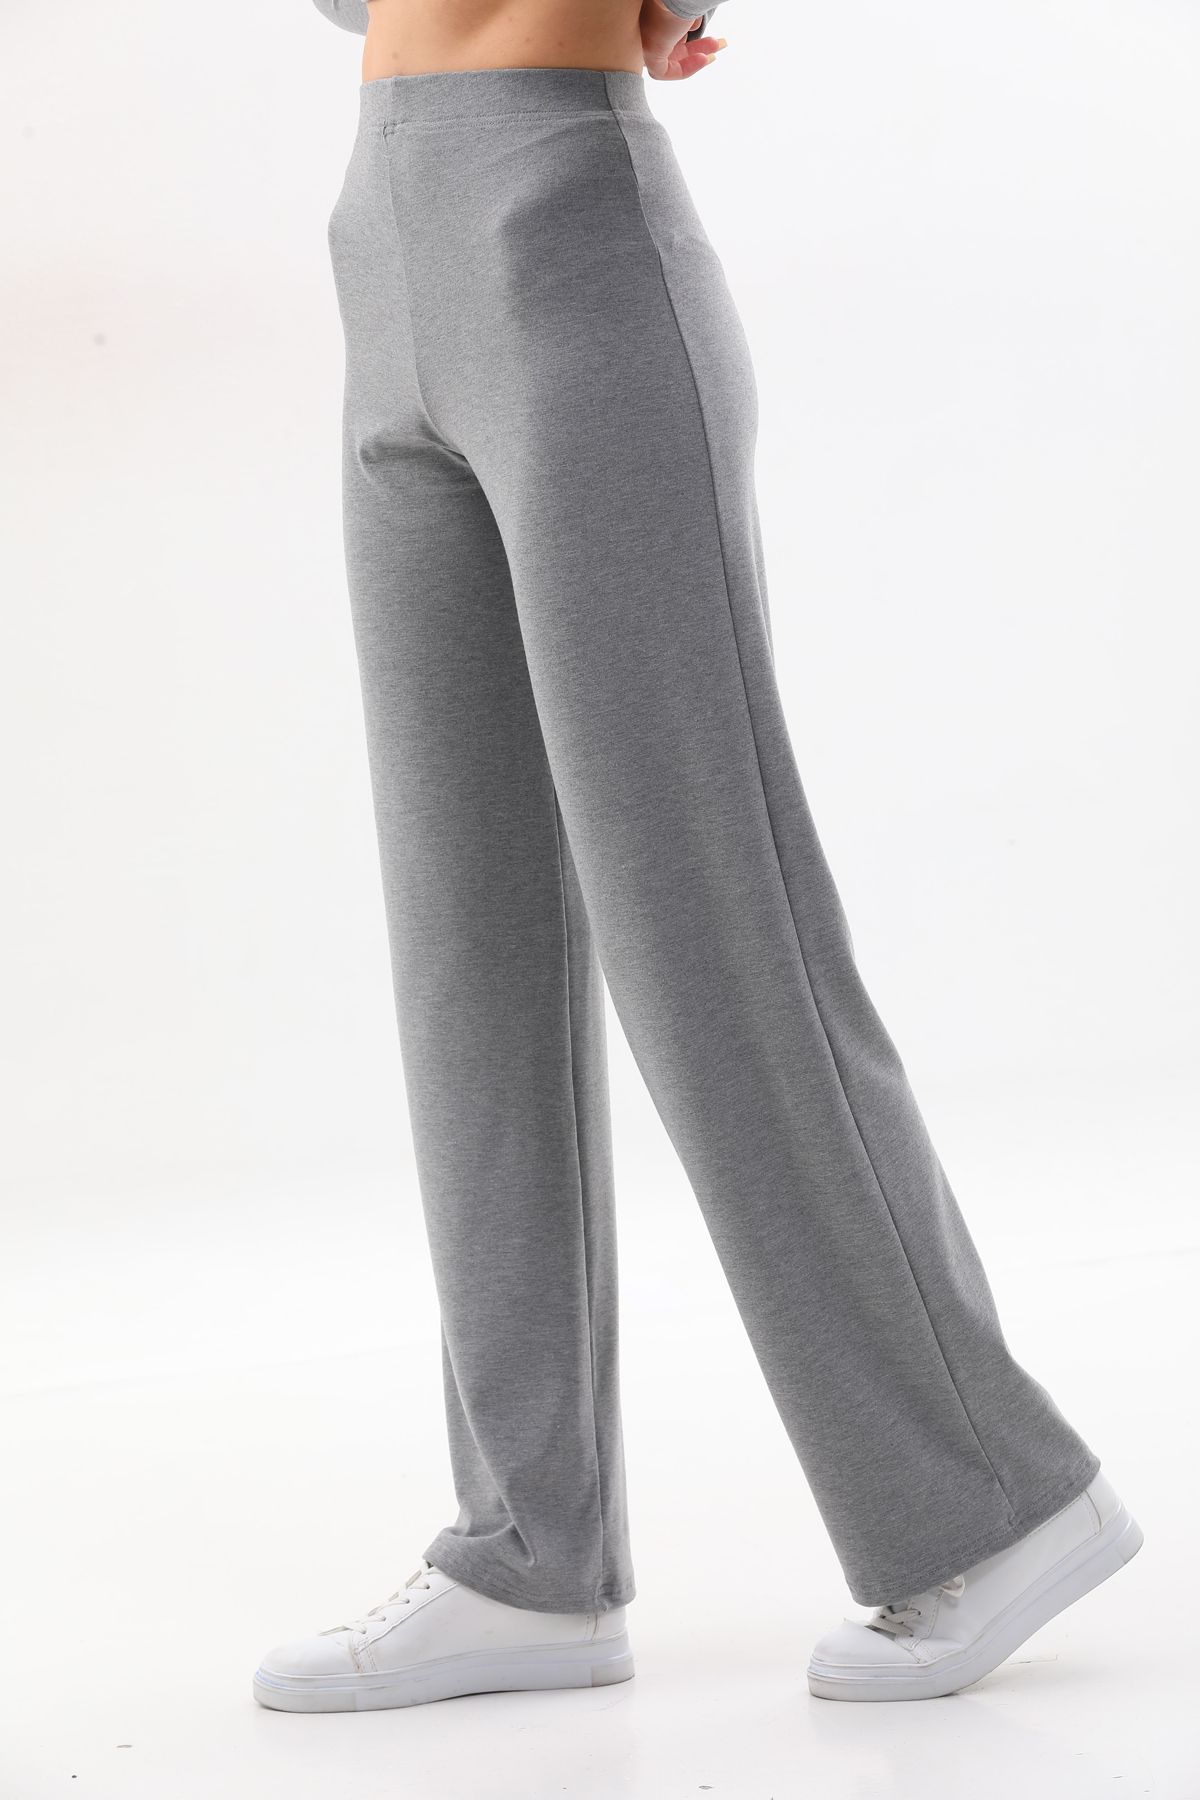 penyebizden Extra Yumuşak Uzun Viskon Pantolon Home&Outdoor-Gri Melanj